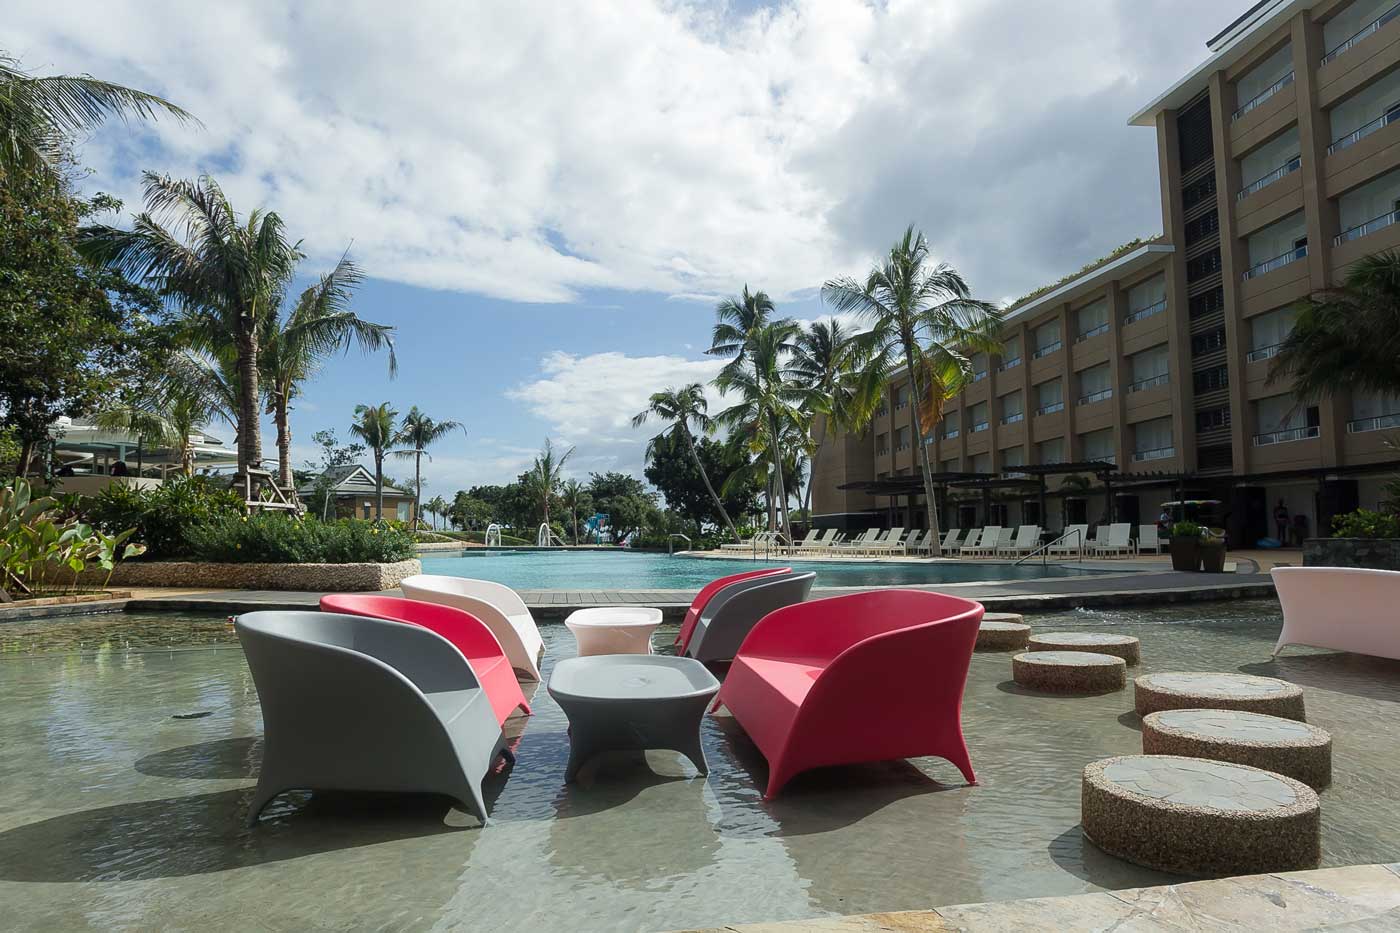 Be Grand Resort Bohol: luxurious getaway in Bohol